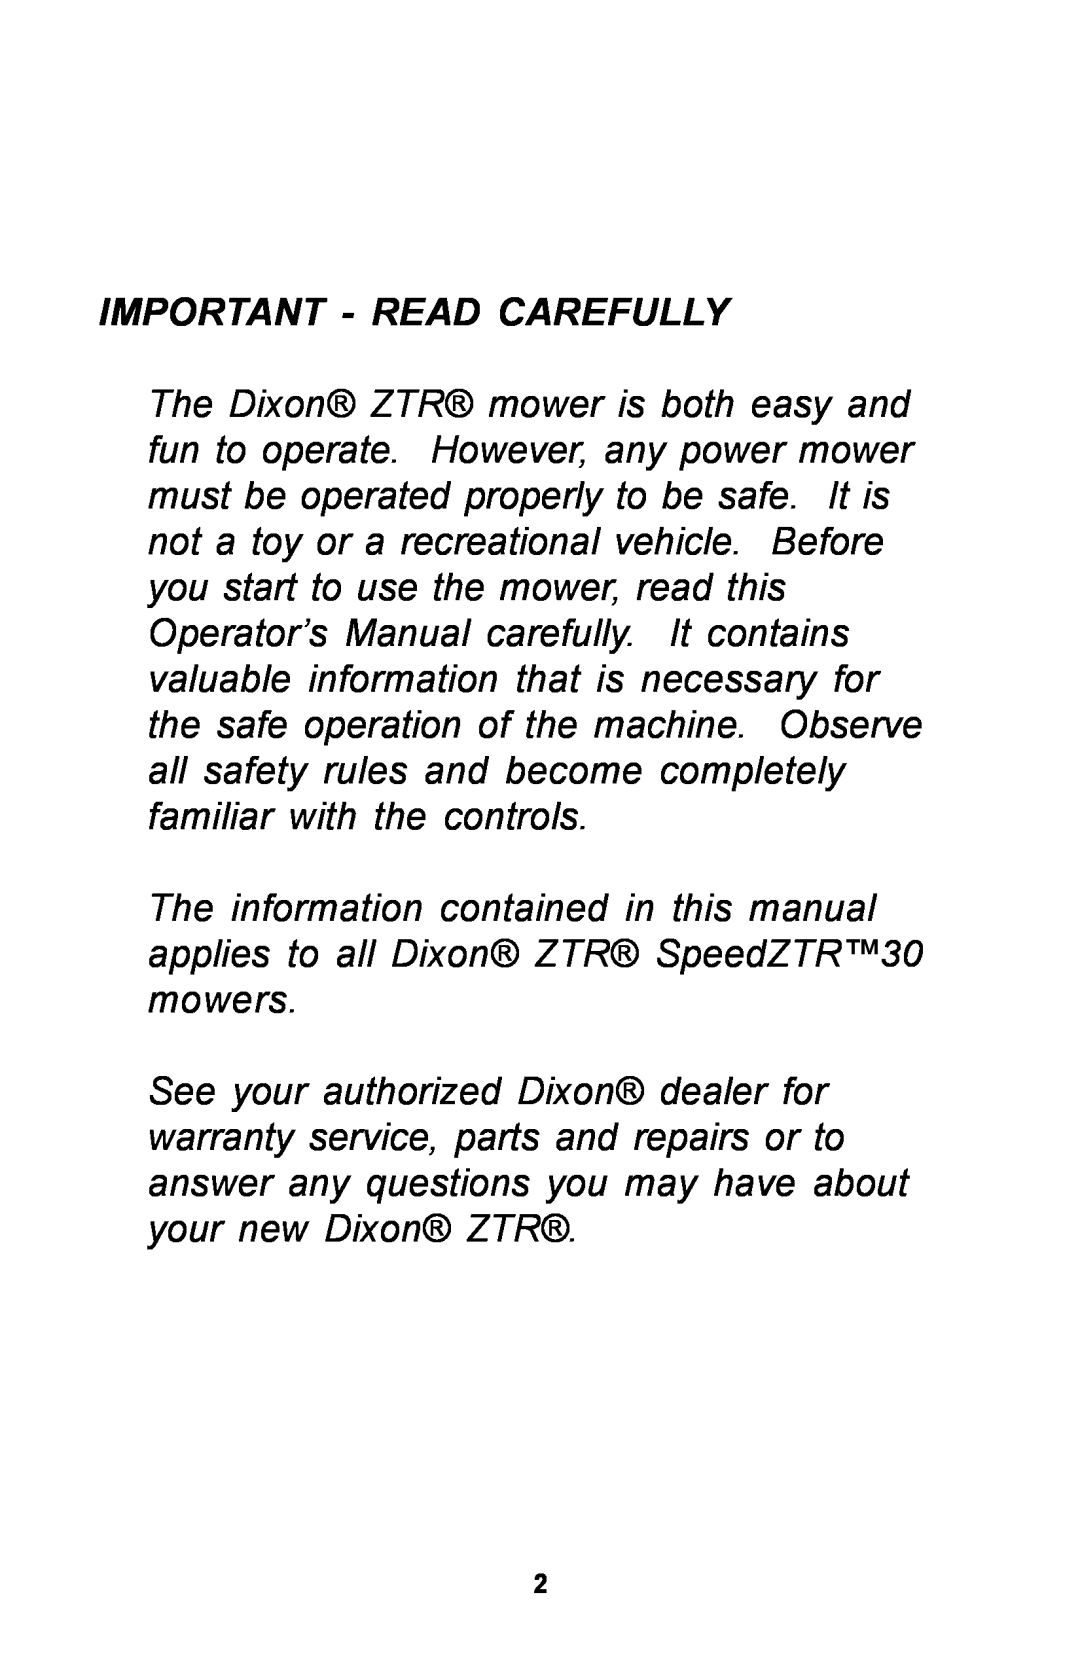 Dixon 30 manual Important - Read Carefully 